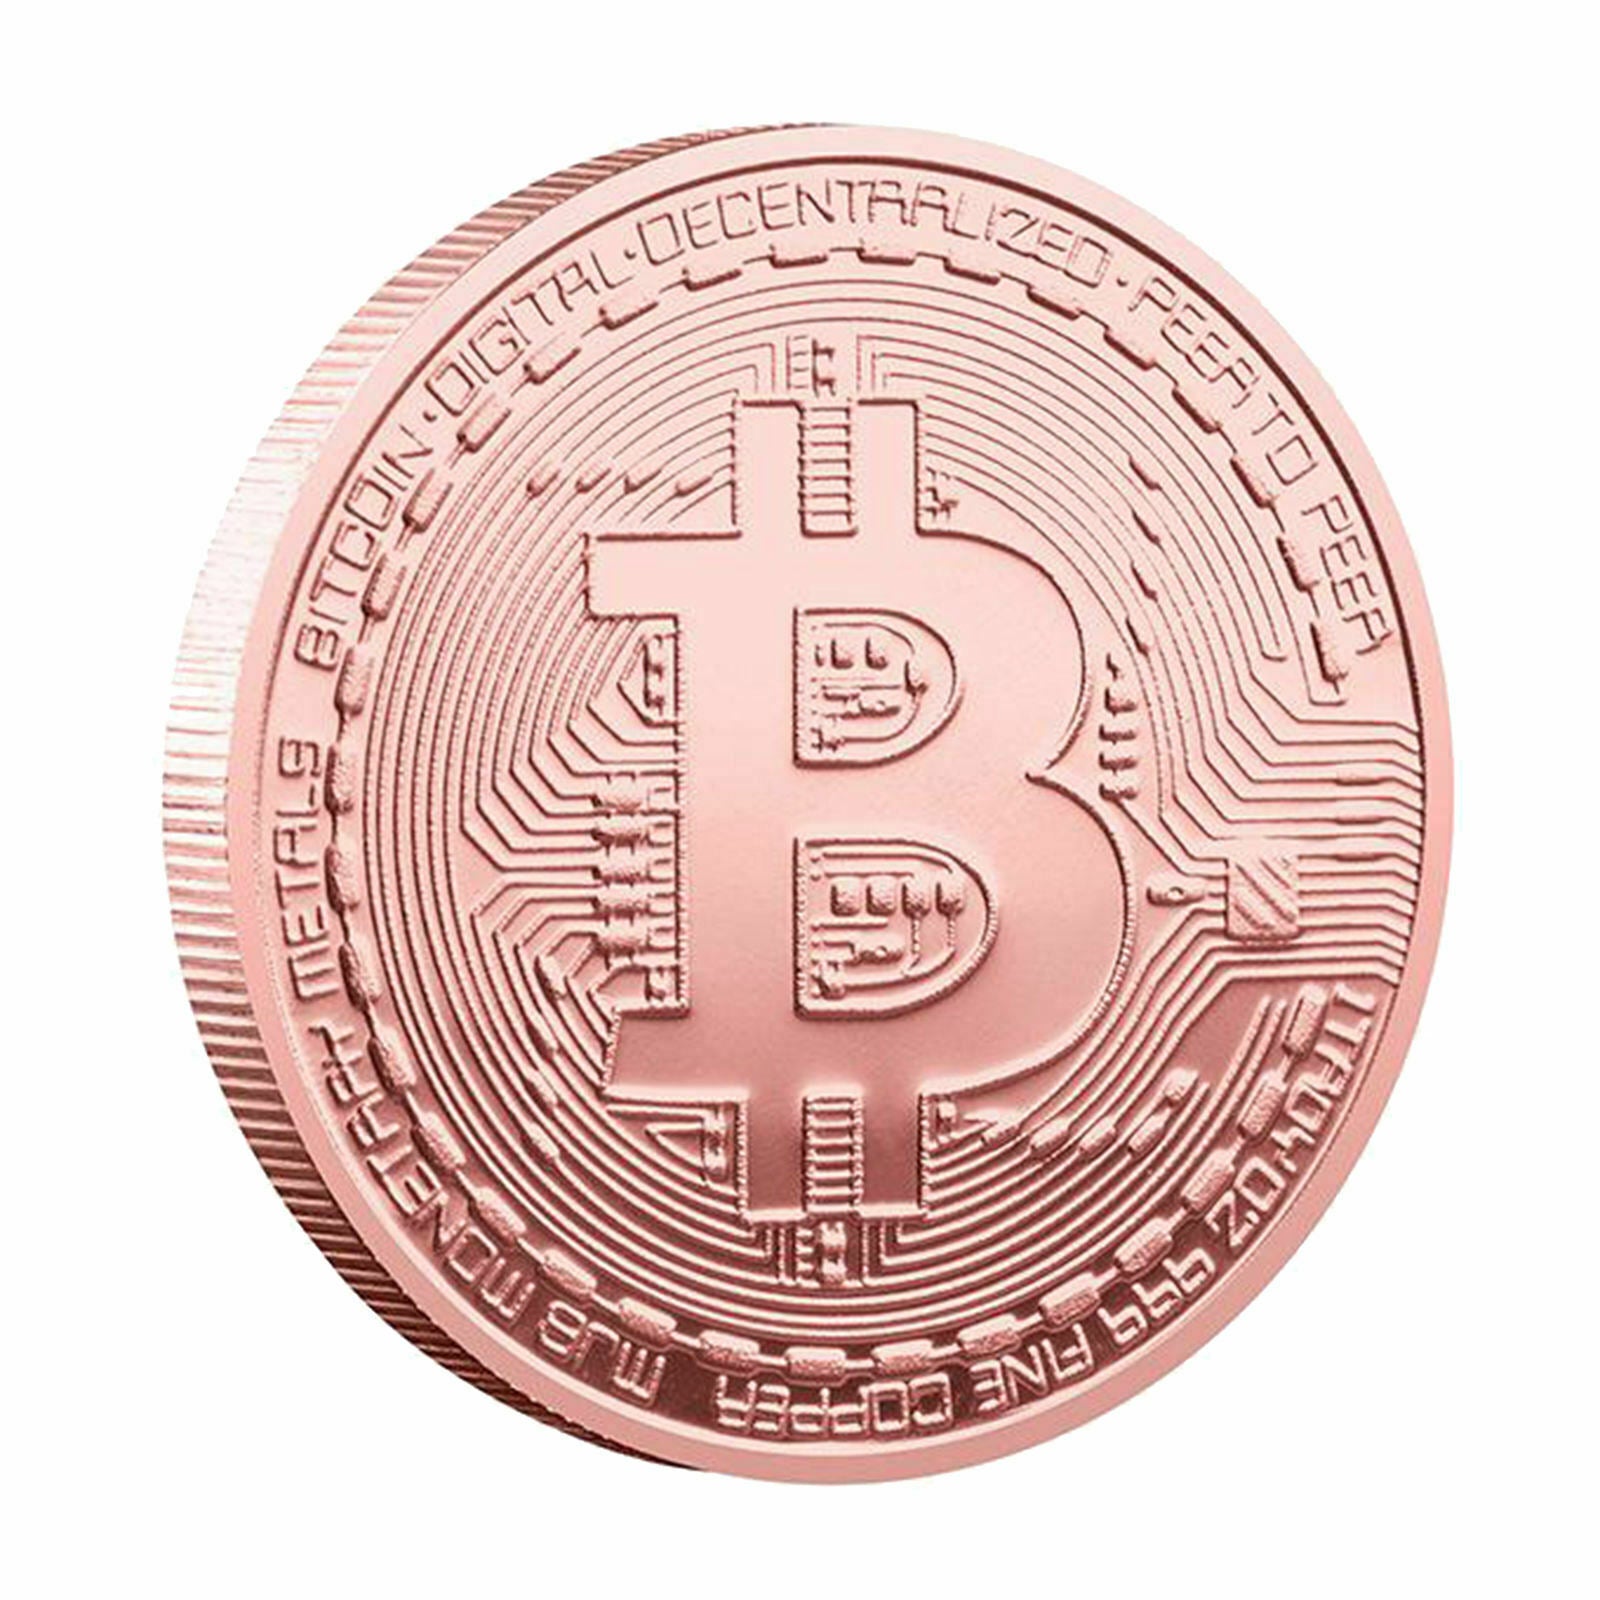 Virtual Bitcoin Coin Commemorative Round Plated Collectors Coin Bit Coin